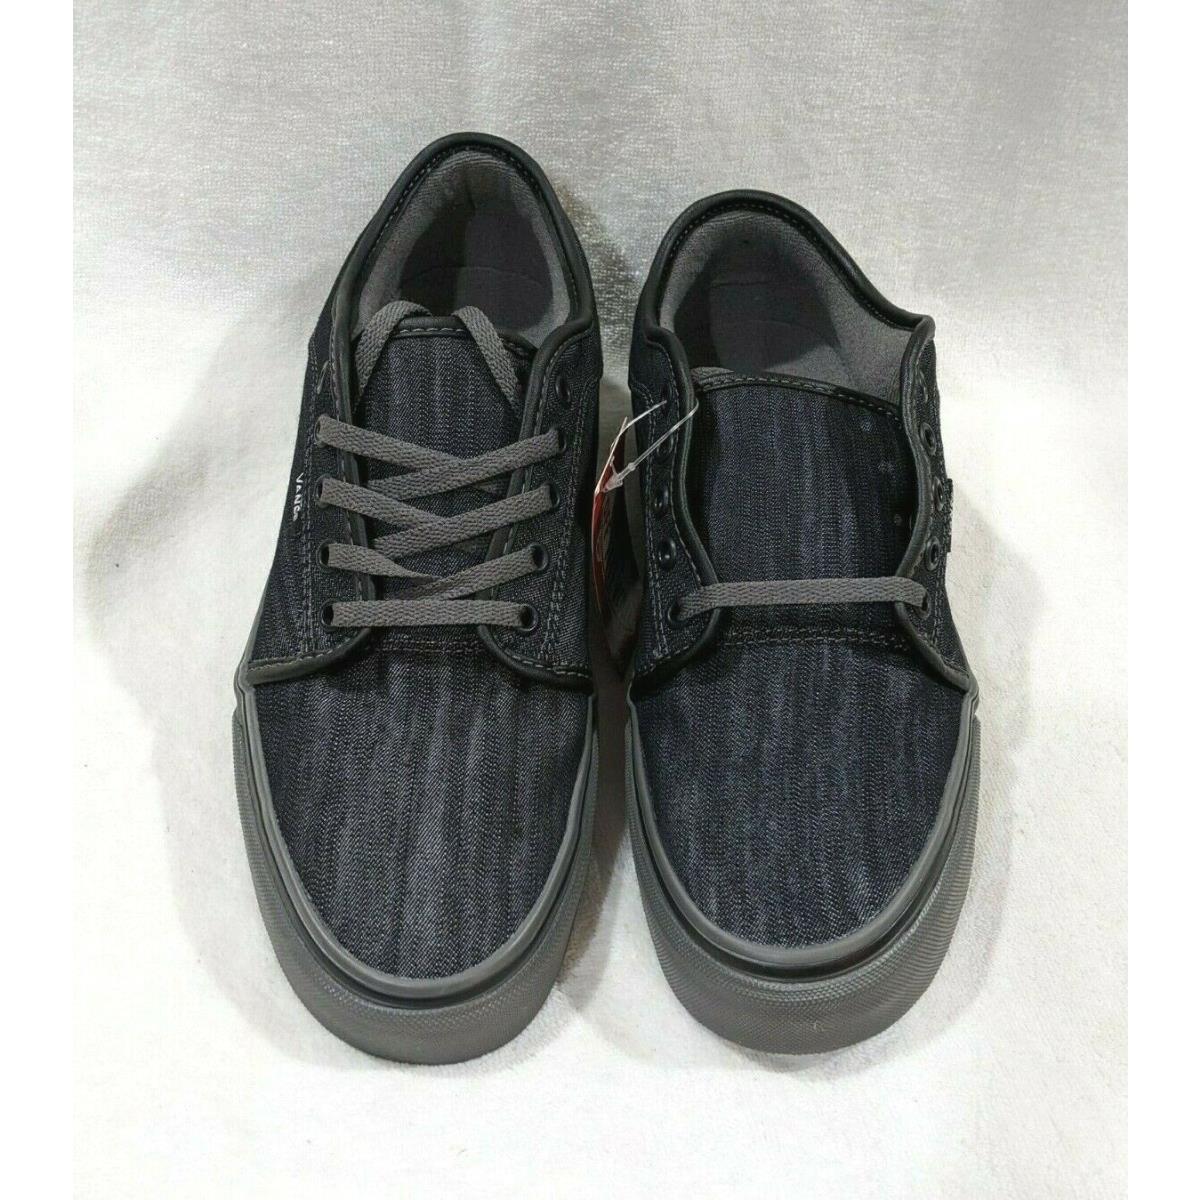 Vans shoes Chukka Low - Black 1